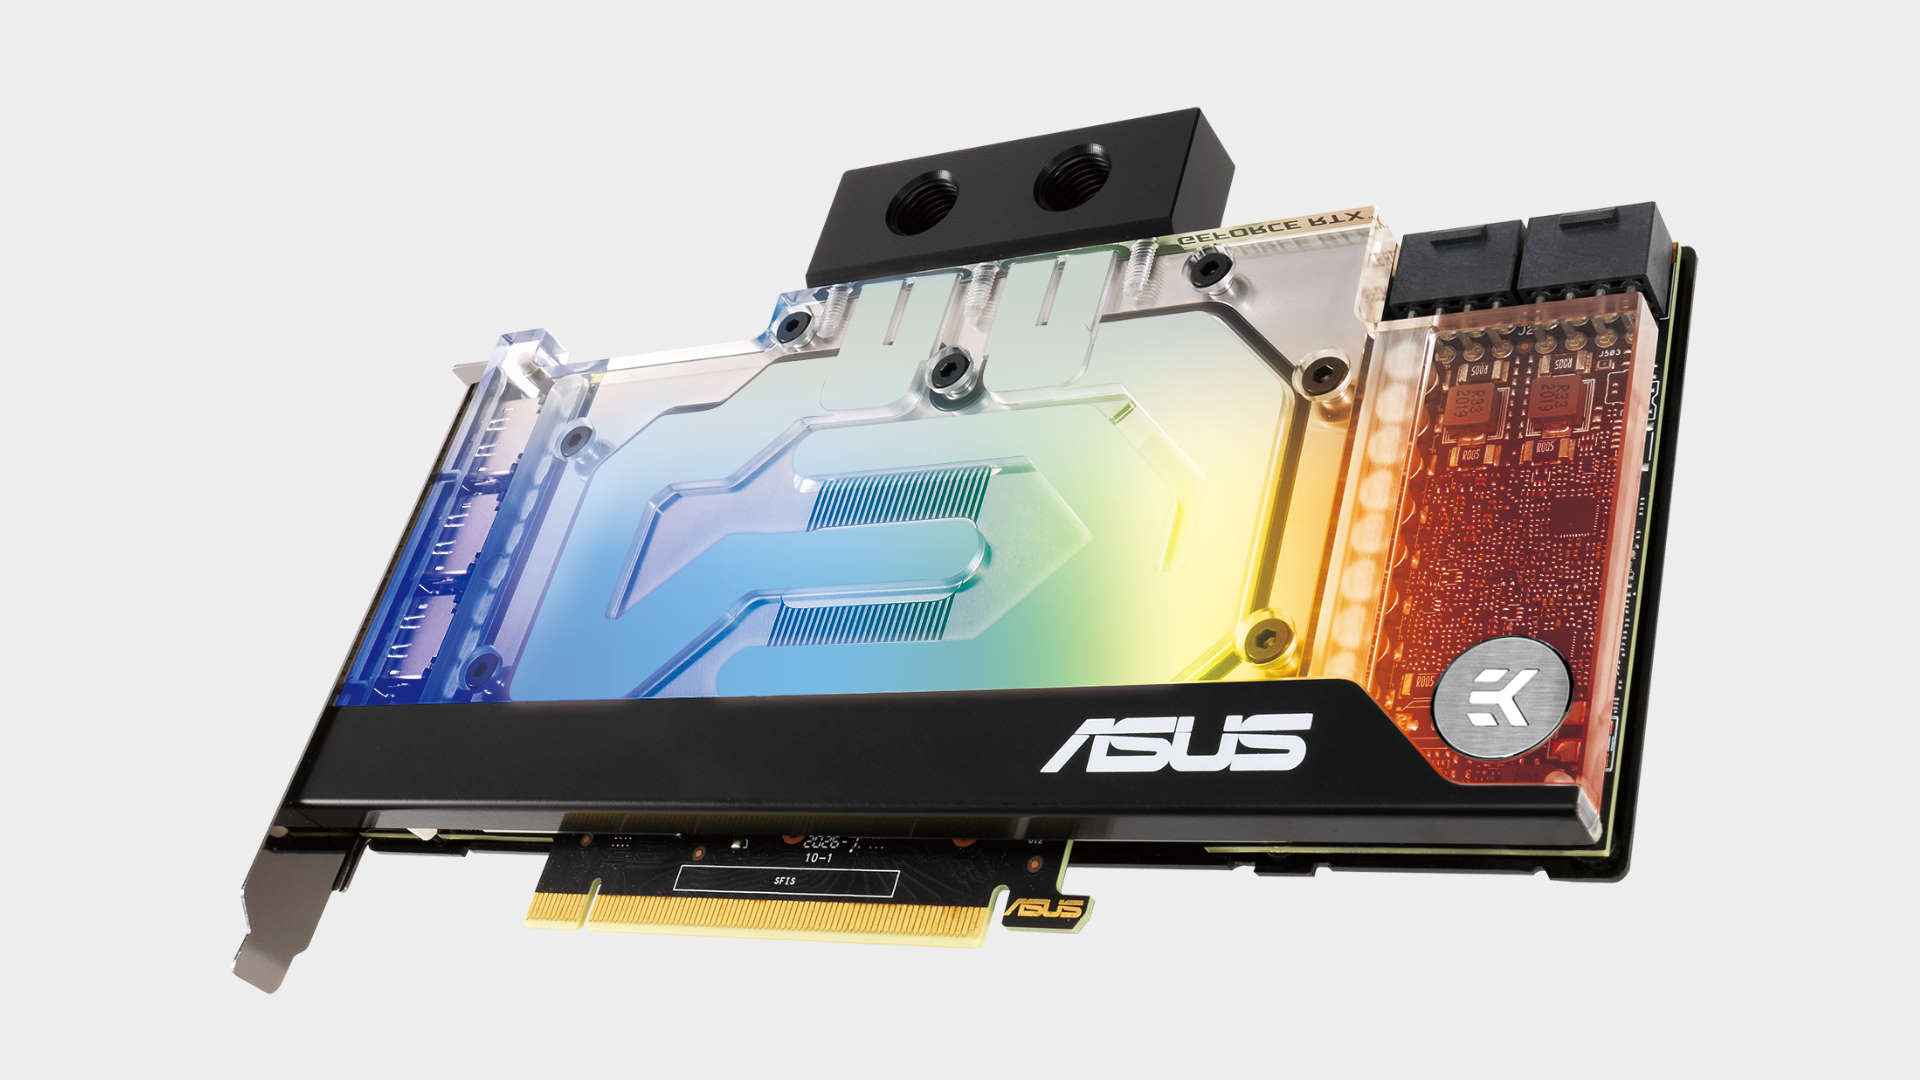  Asus gives its new Nvidia RTX 30-series GPUs a sexy watercooled PCB slip 